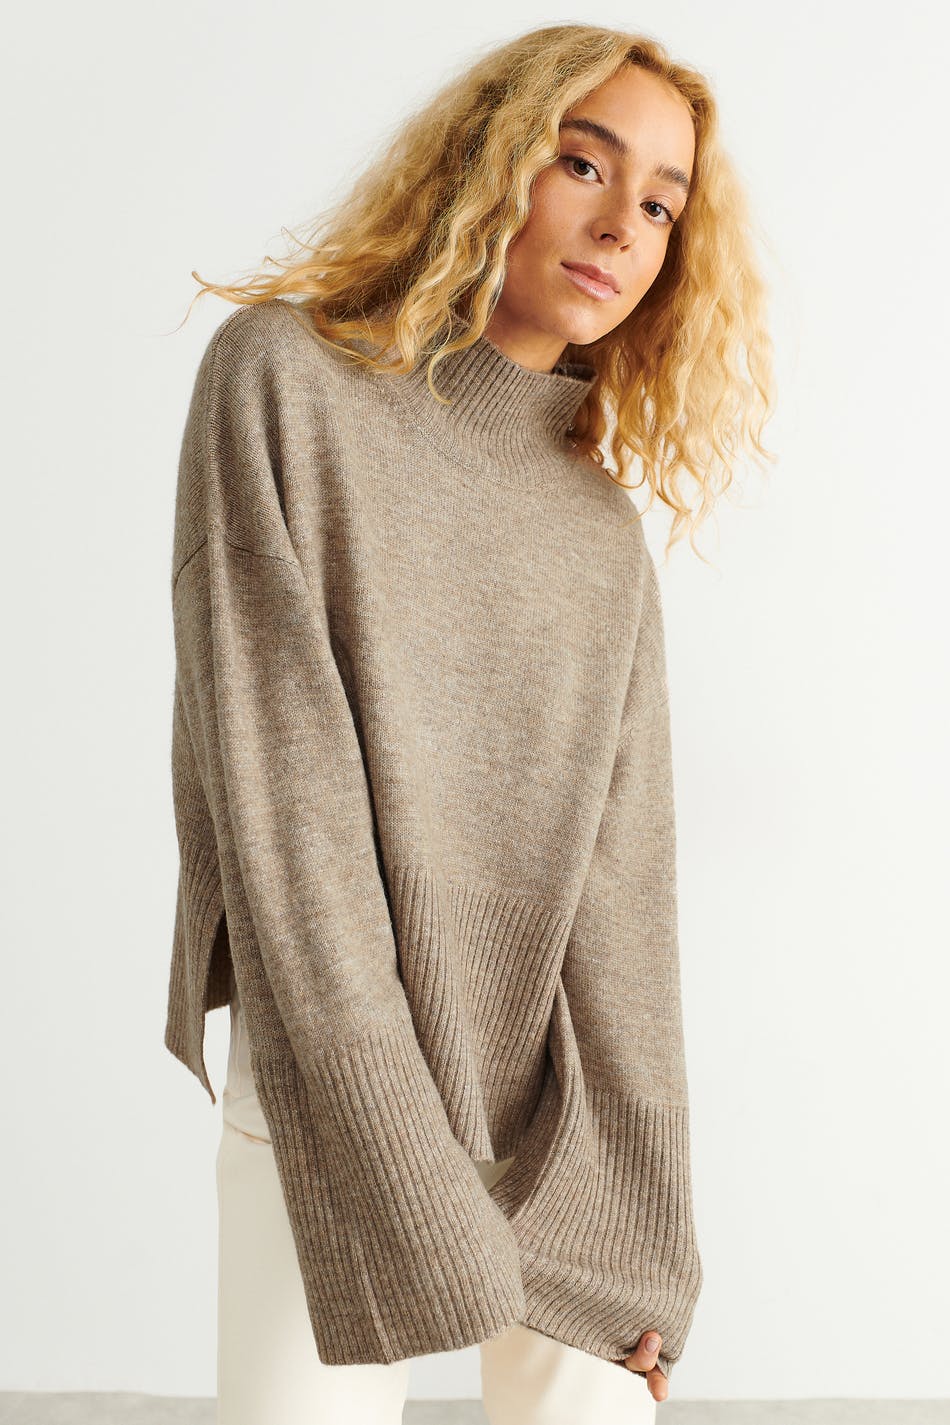 Lova knitted sweater